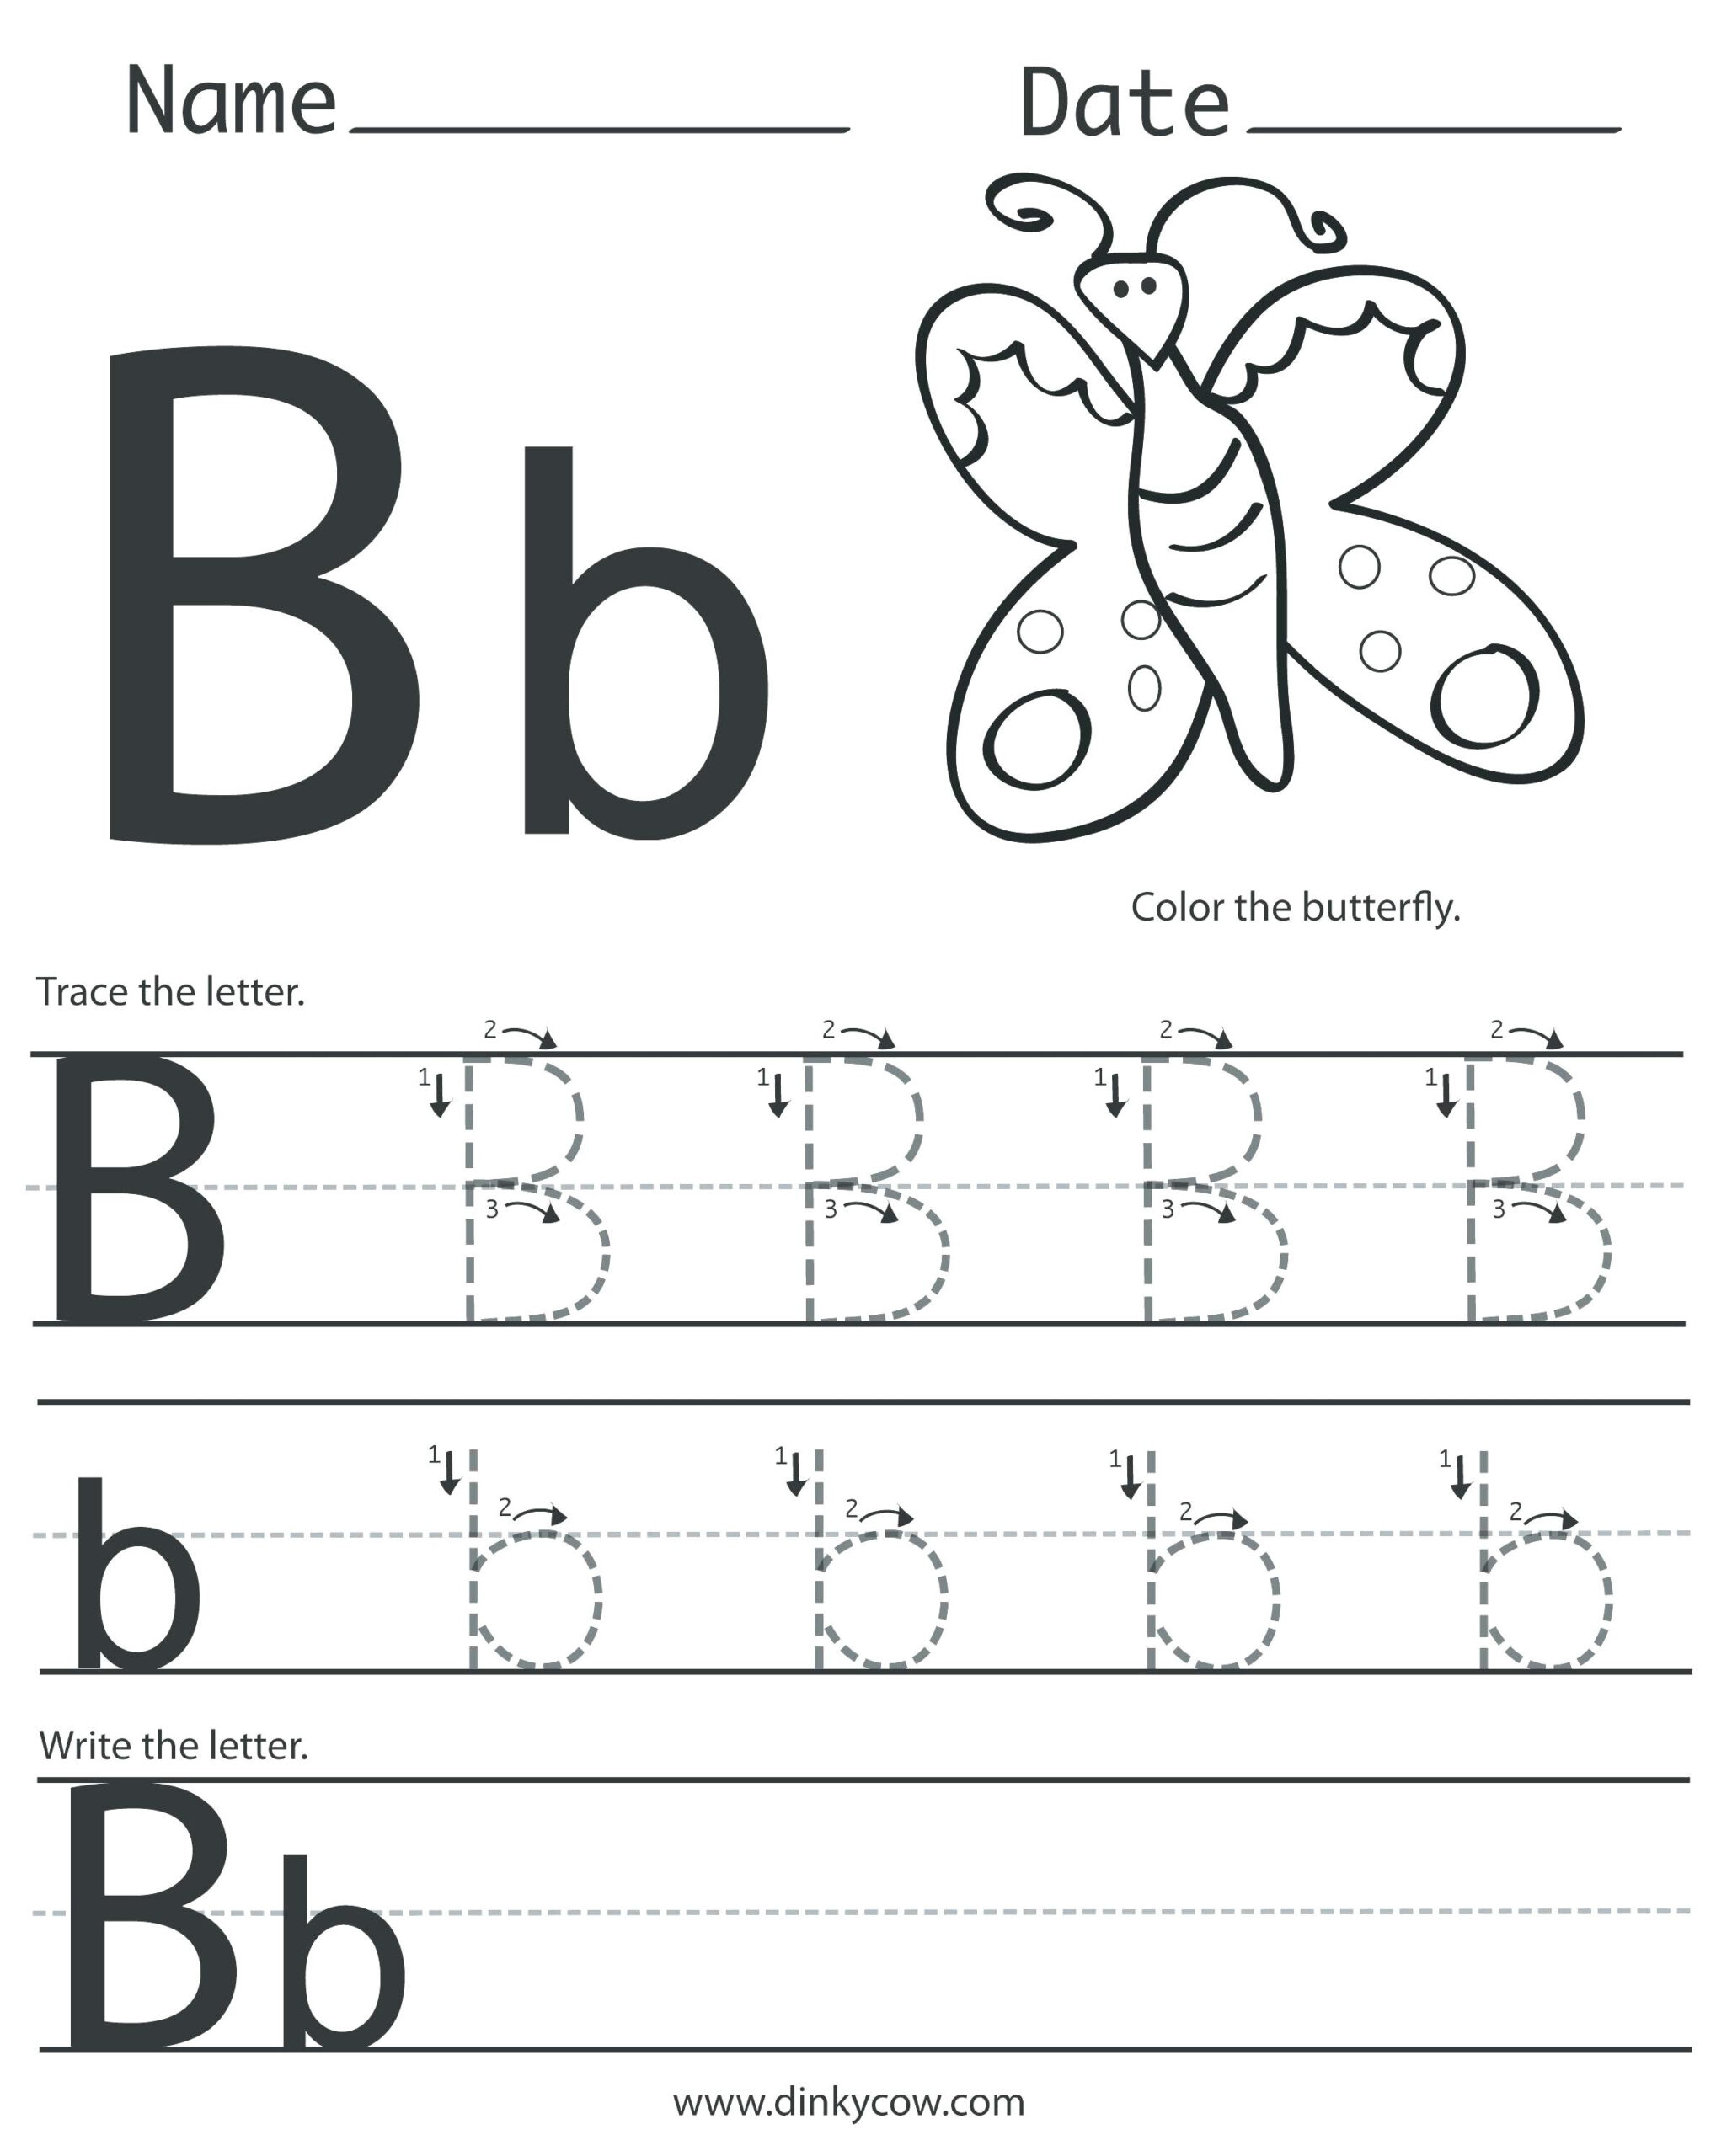 peerless-the-letter-b-preschool-worksheets-life-cycle-of-a-ladybug-kindergarten